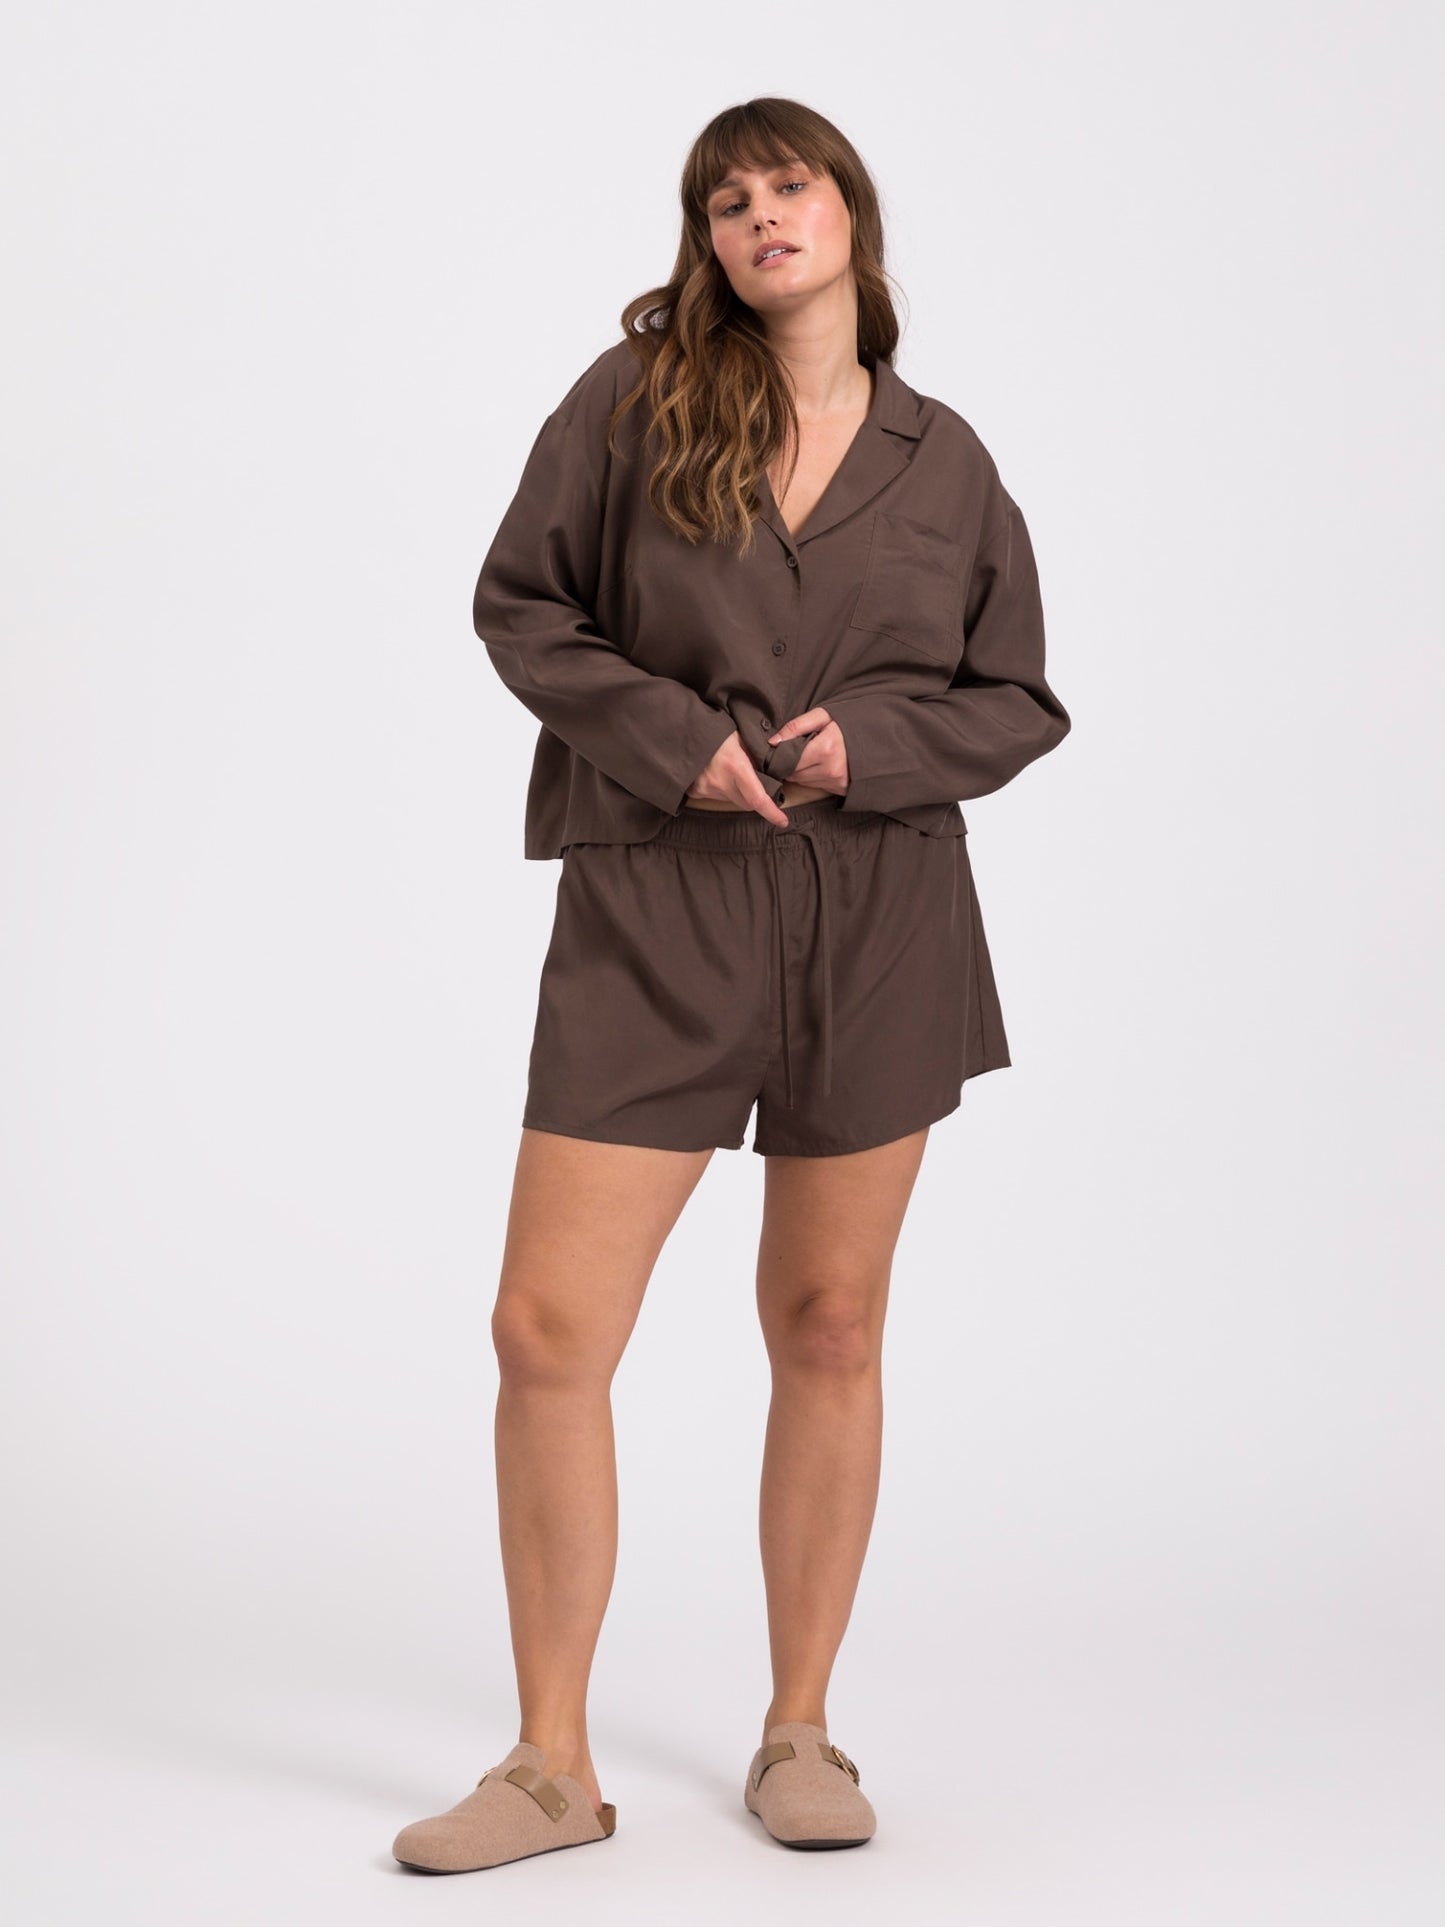 Snuggle pajama shorts - Chocolate